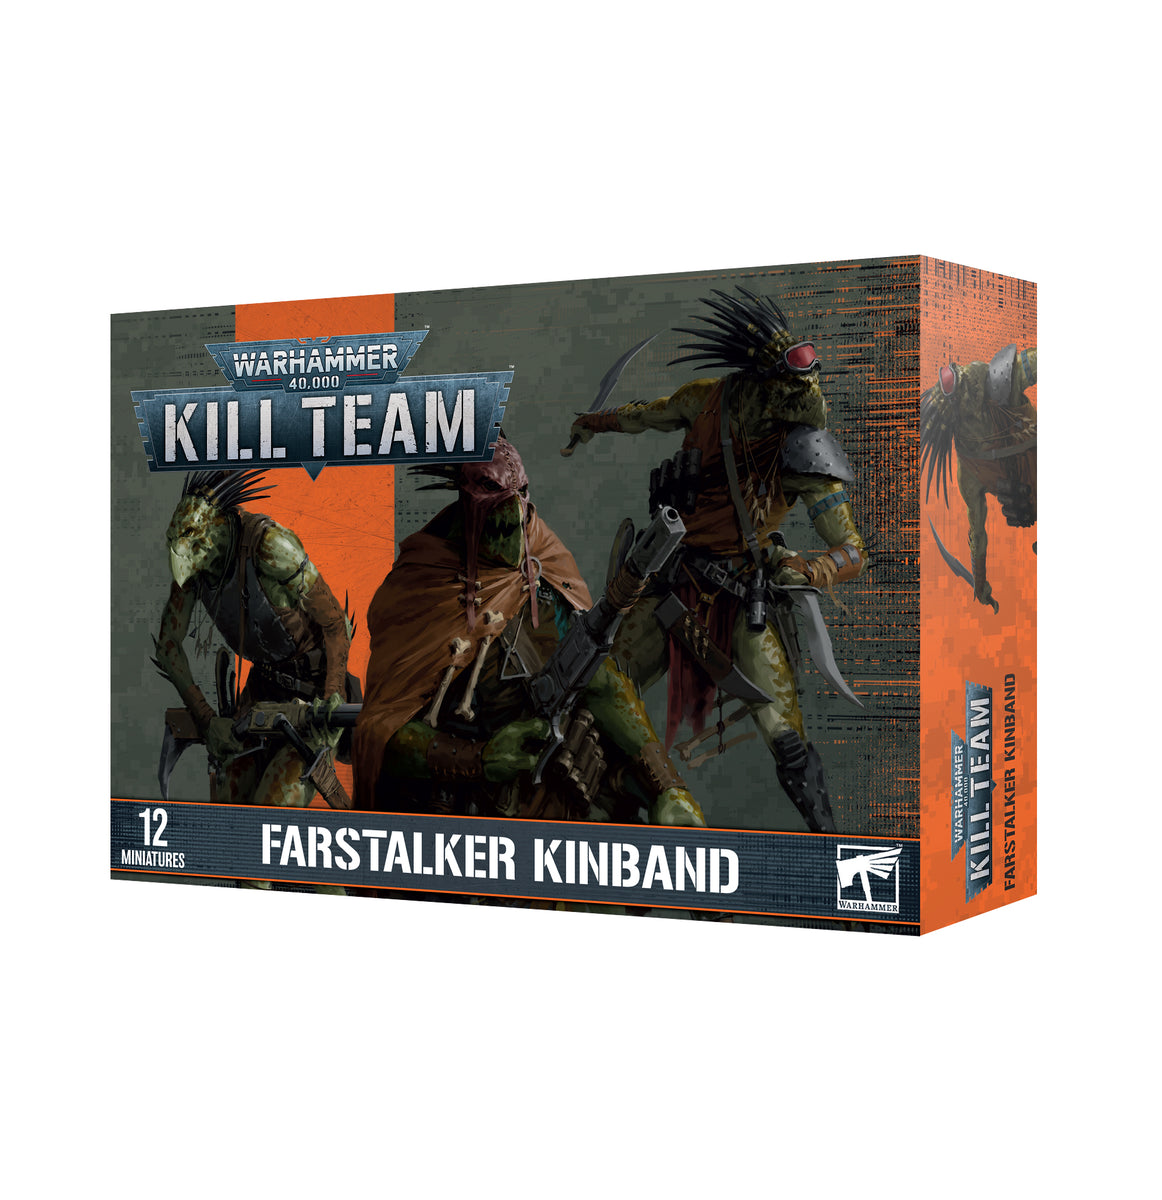 Farstalker Kinband (Kill Team)